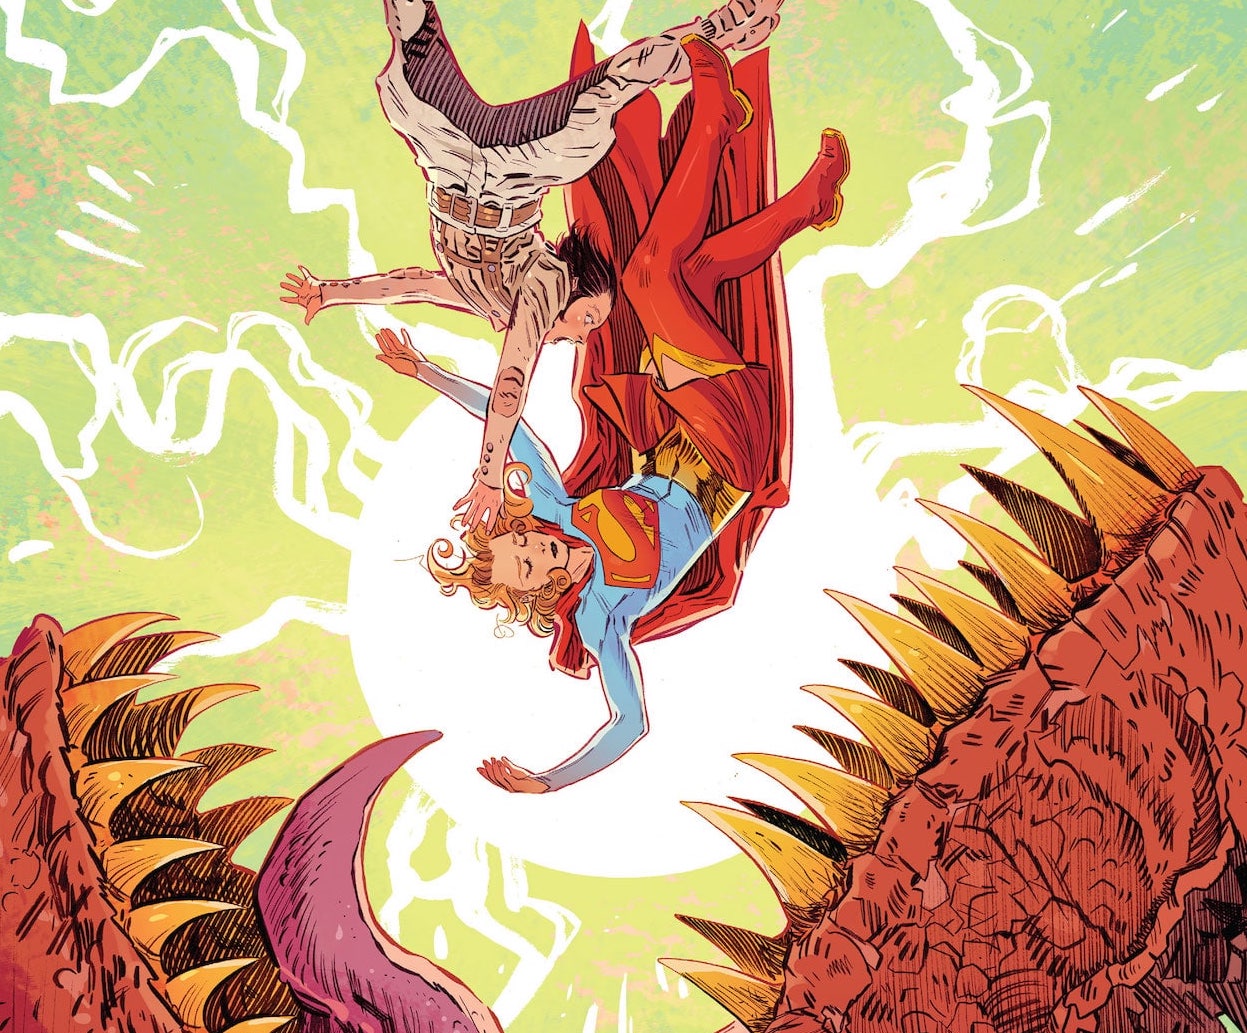 'Supergirl: Woman of Tomorrow' #5 is good adventure comics